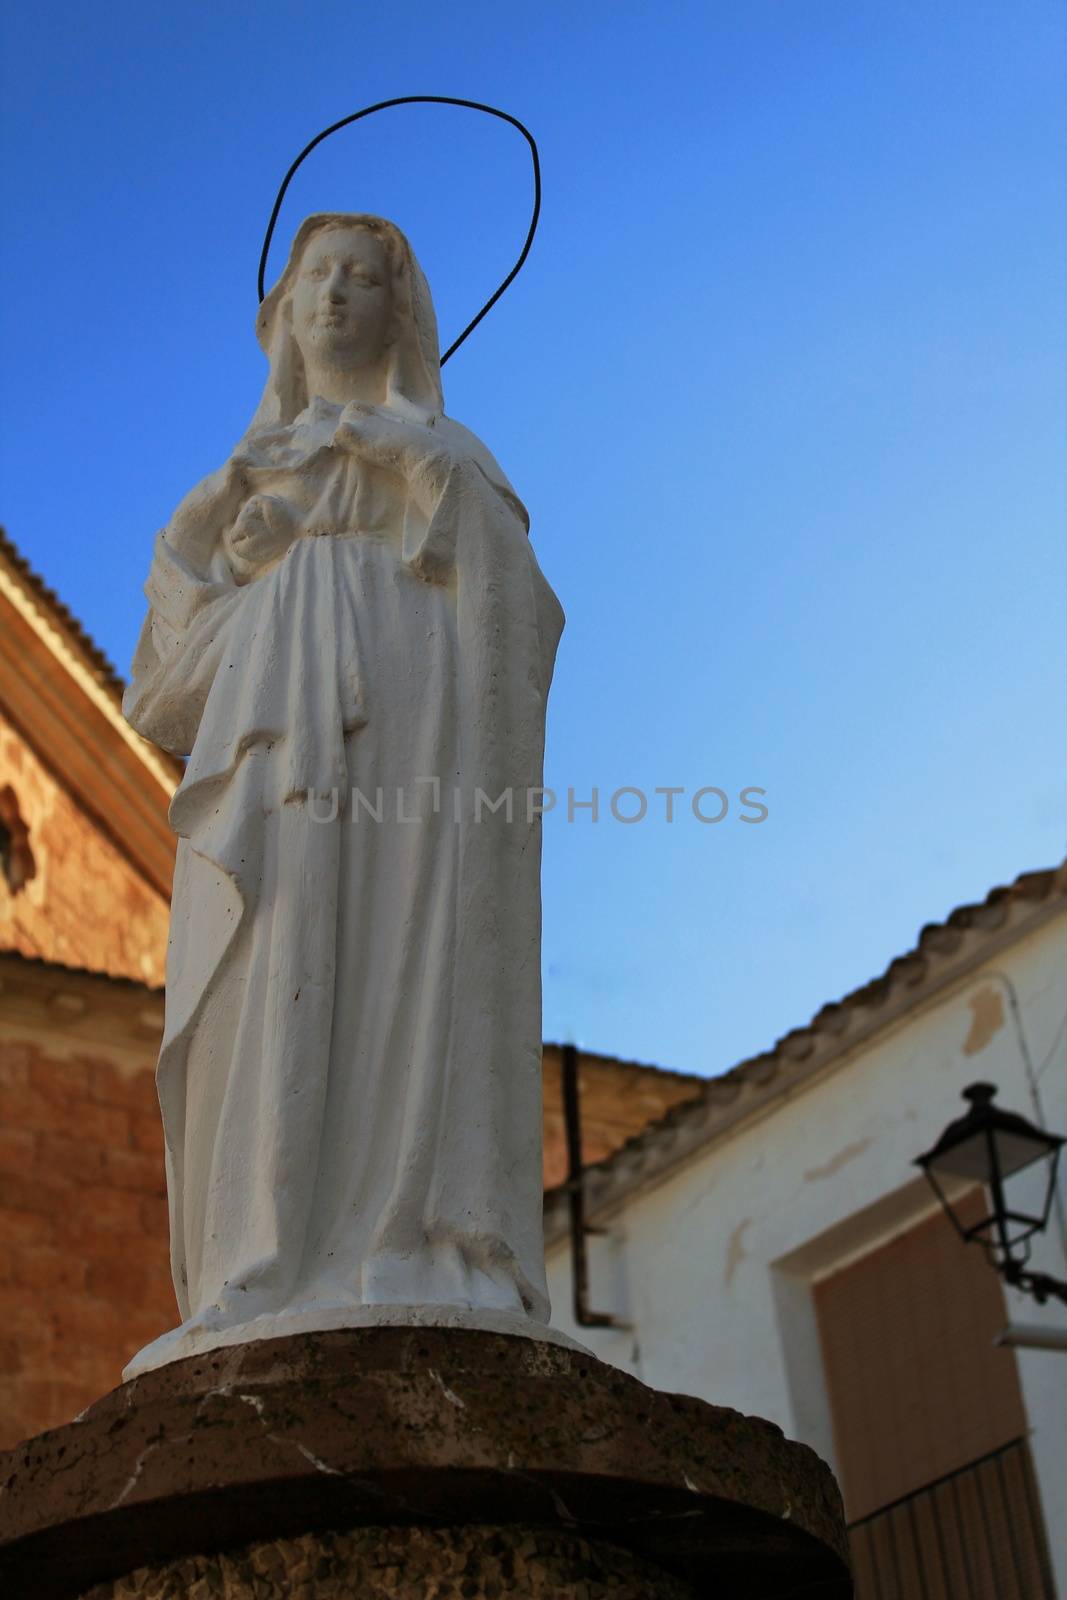 Virgin Mary statue under blue sky in Alborea, Spain by soniabonet